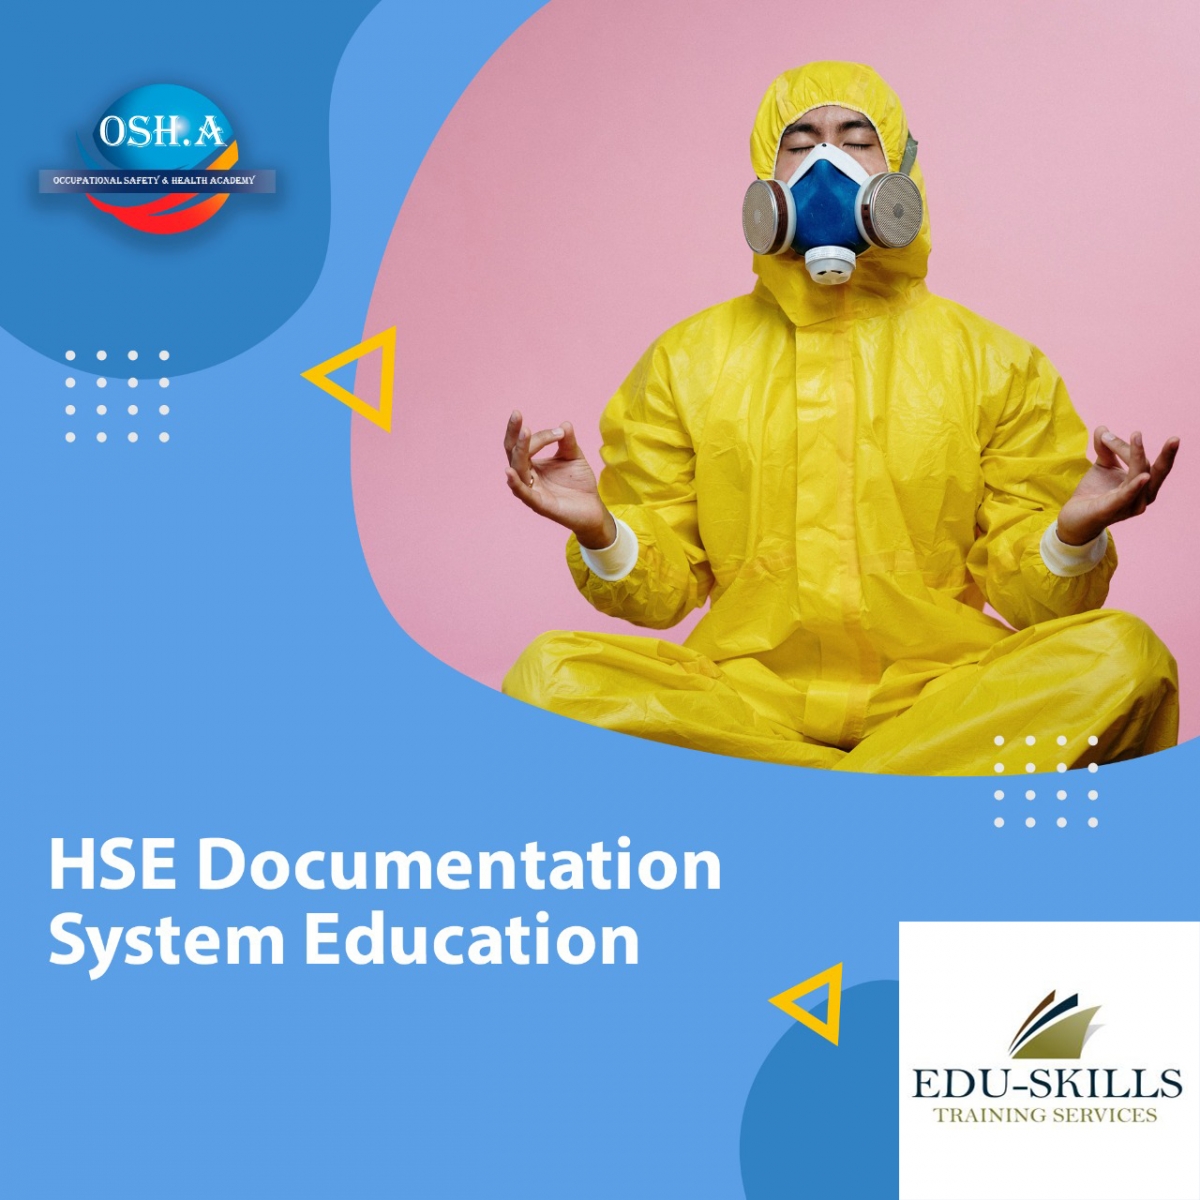 HSE Documentation System Education